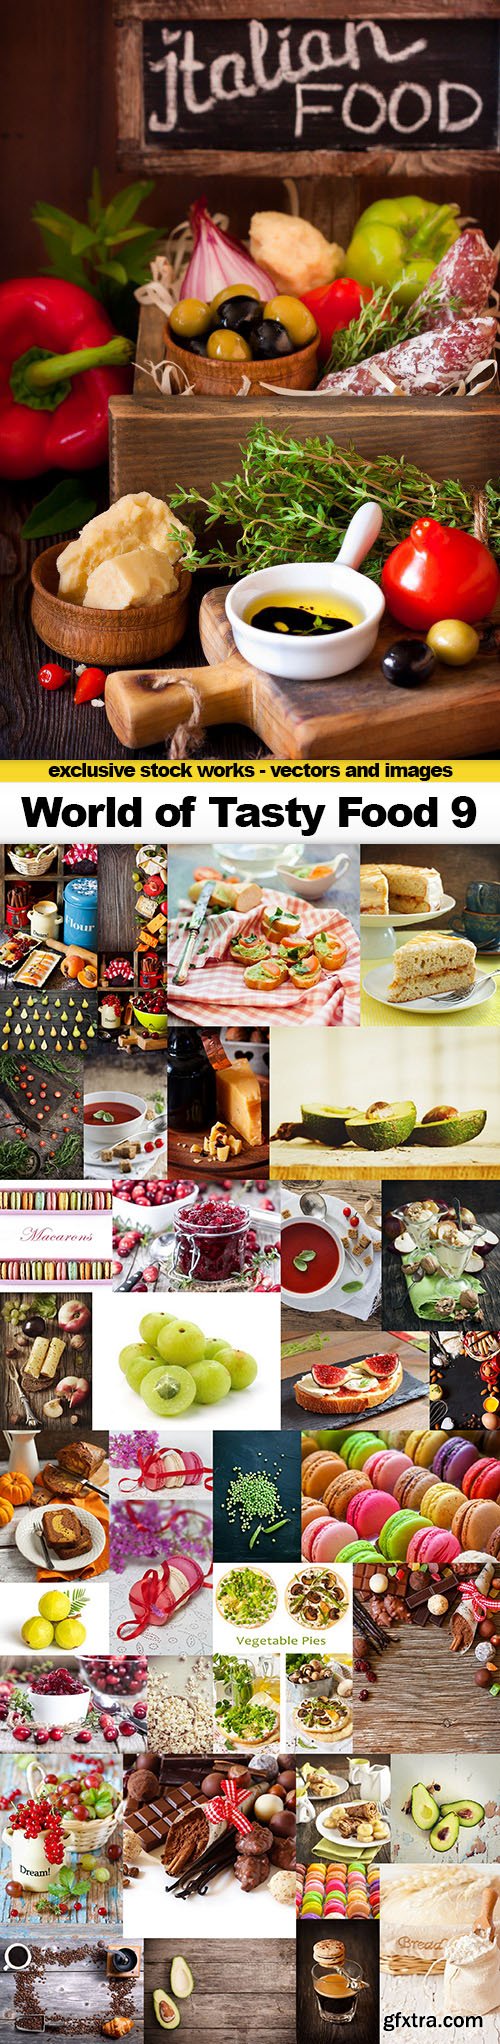 World of Tasty Food 9 - 38x UHQ JPEG